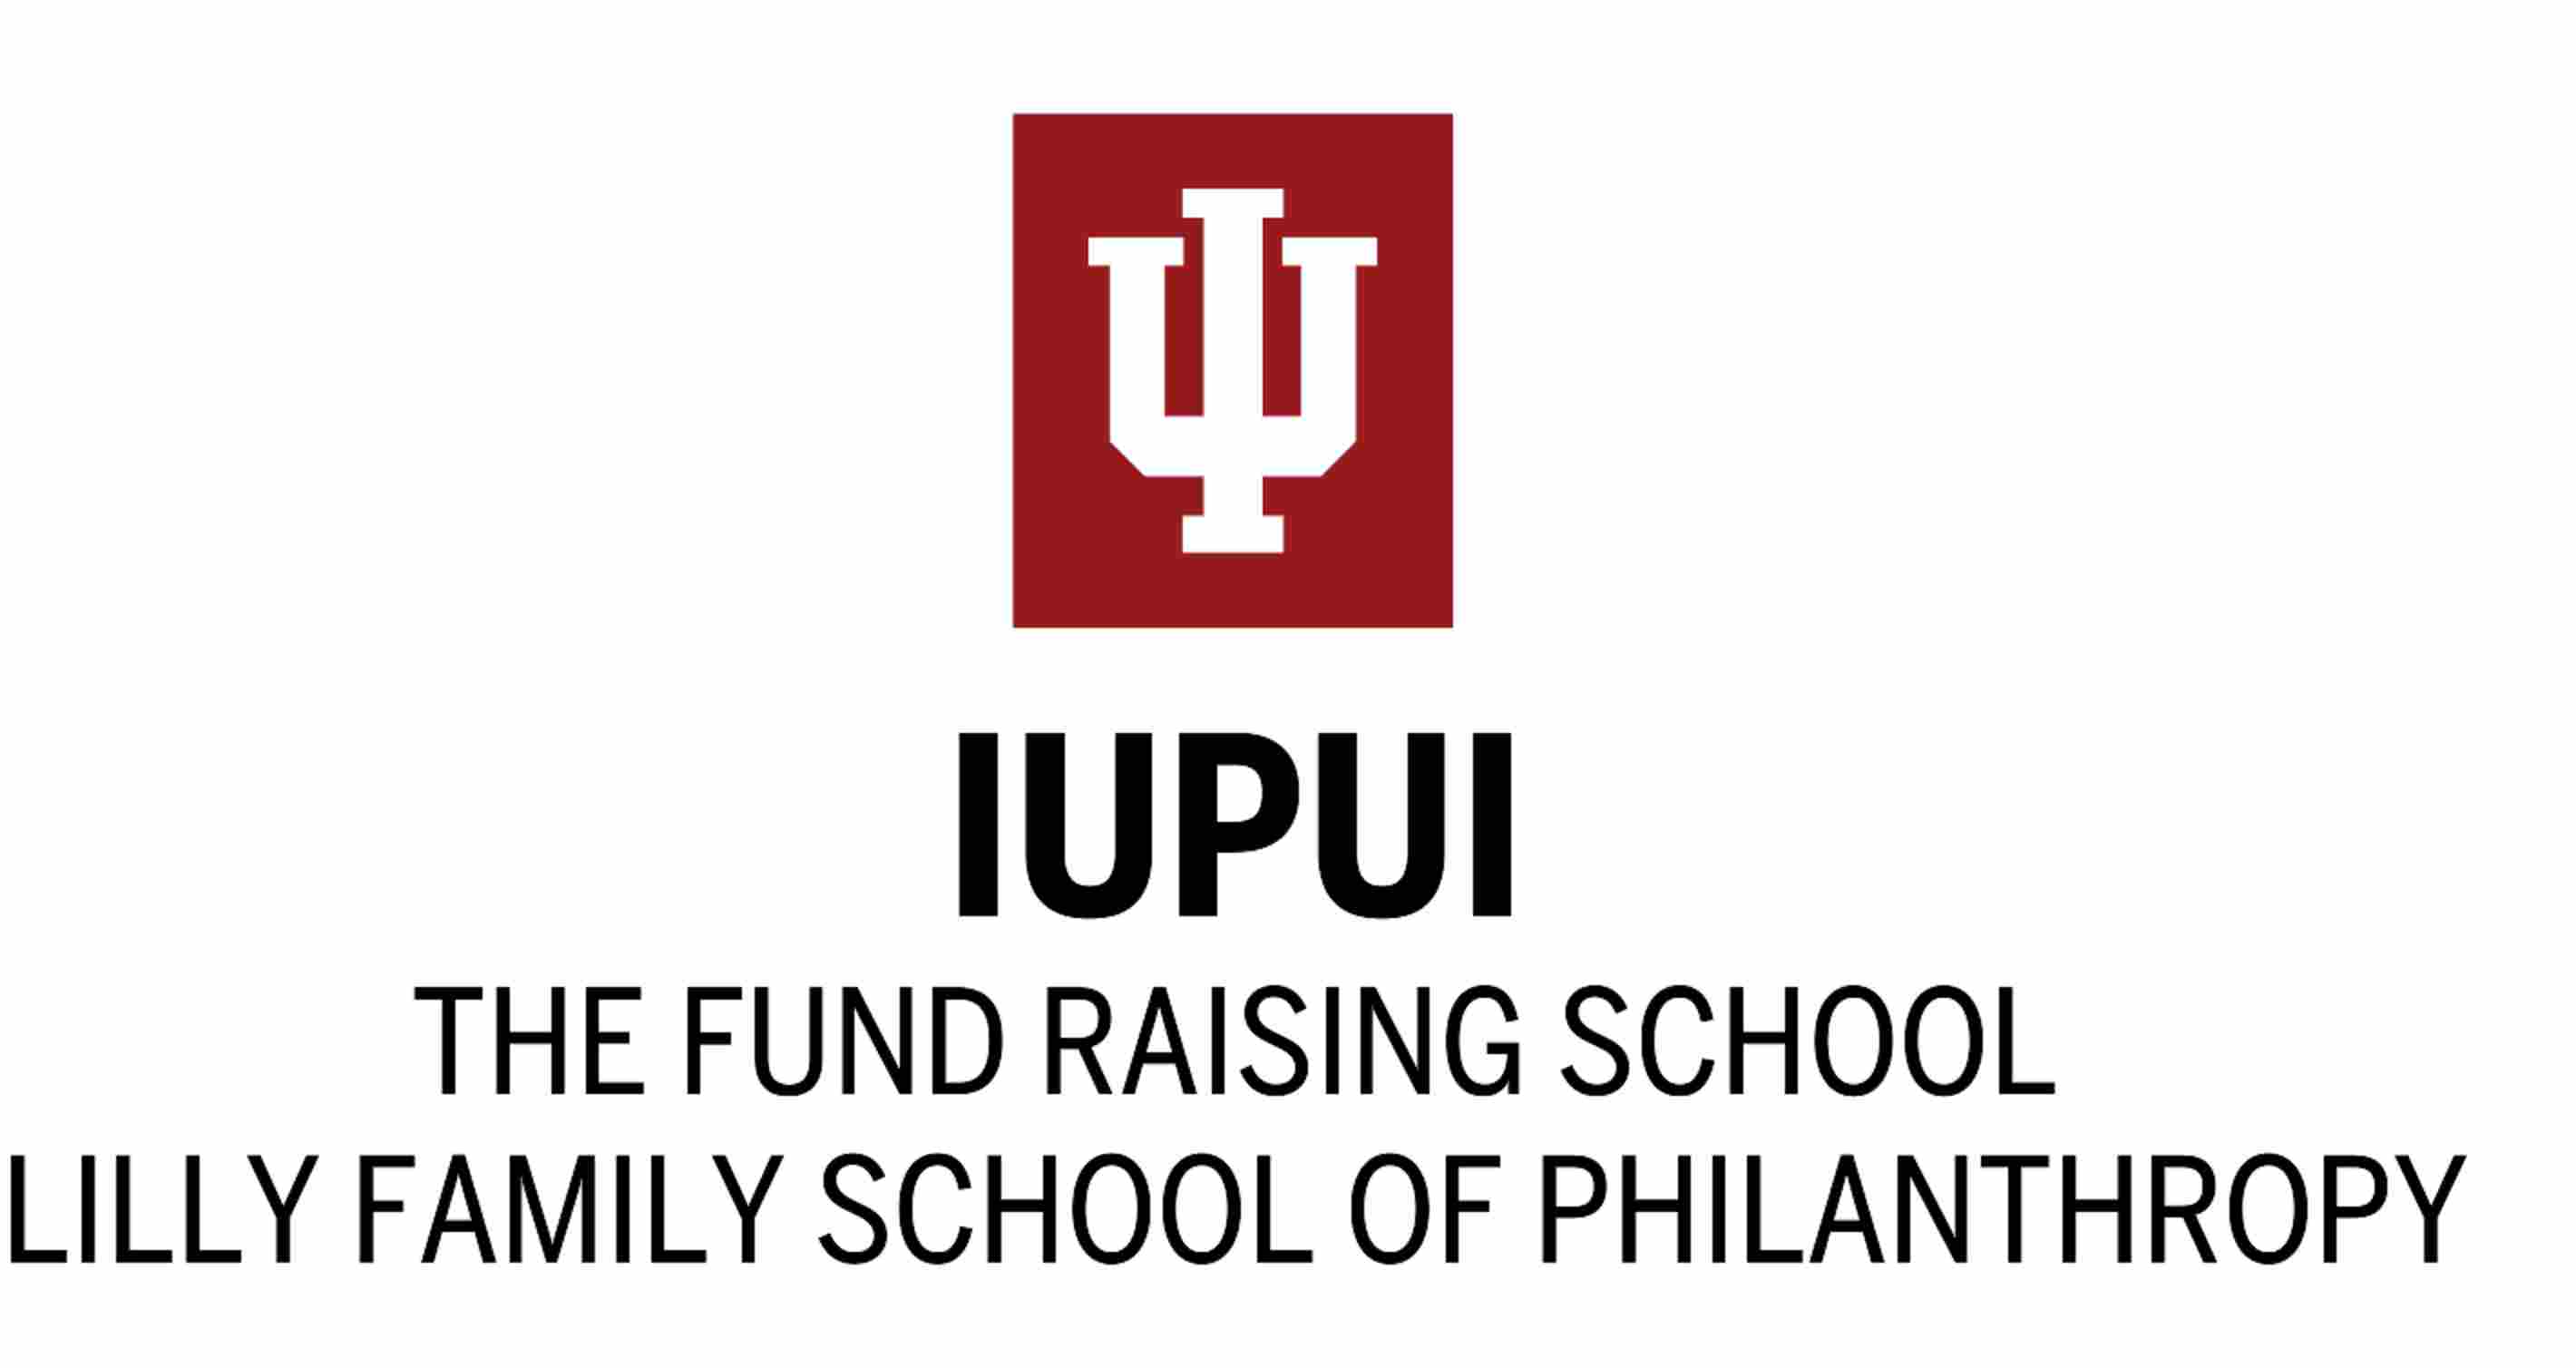 IUPUI Logo and Link